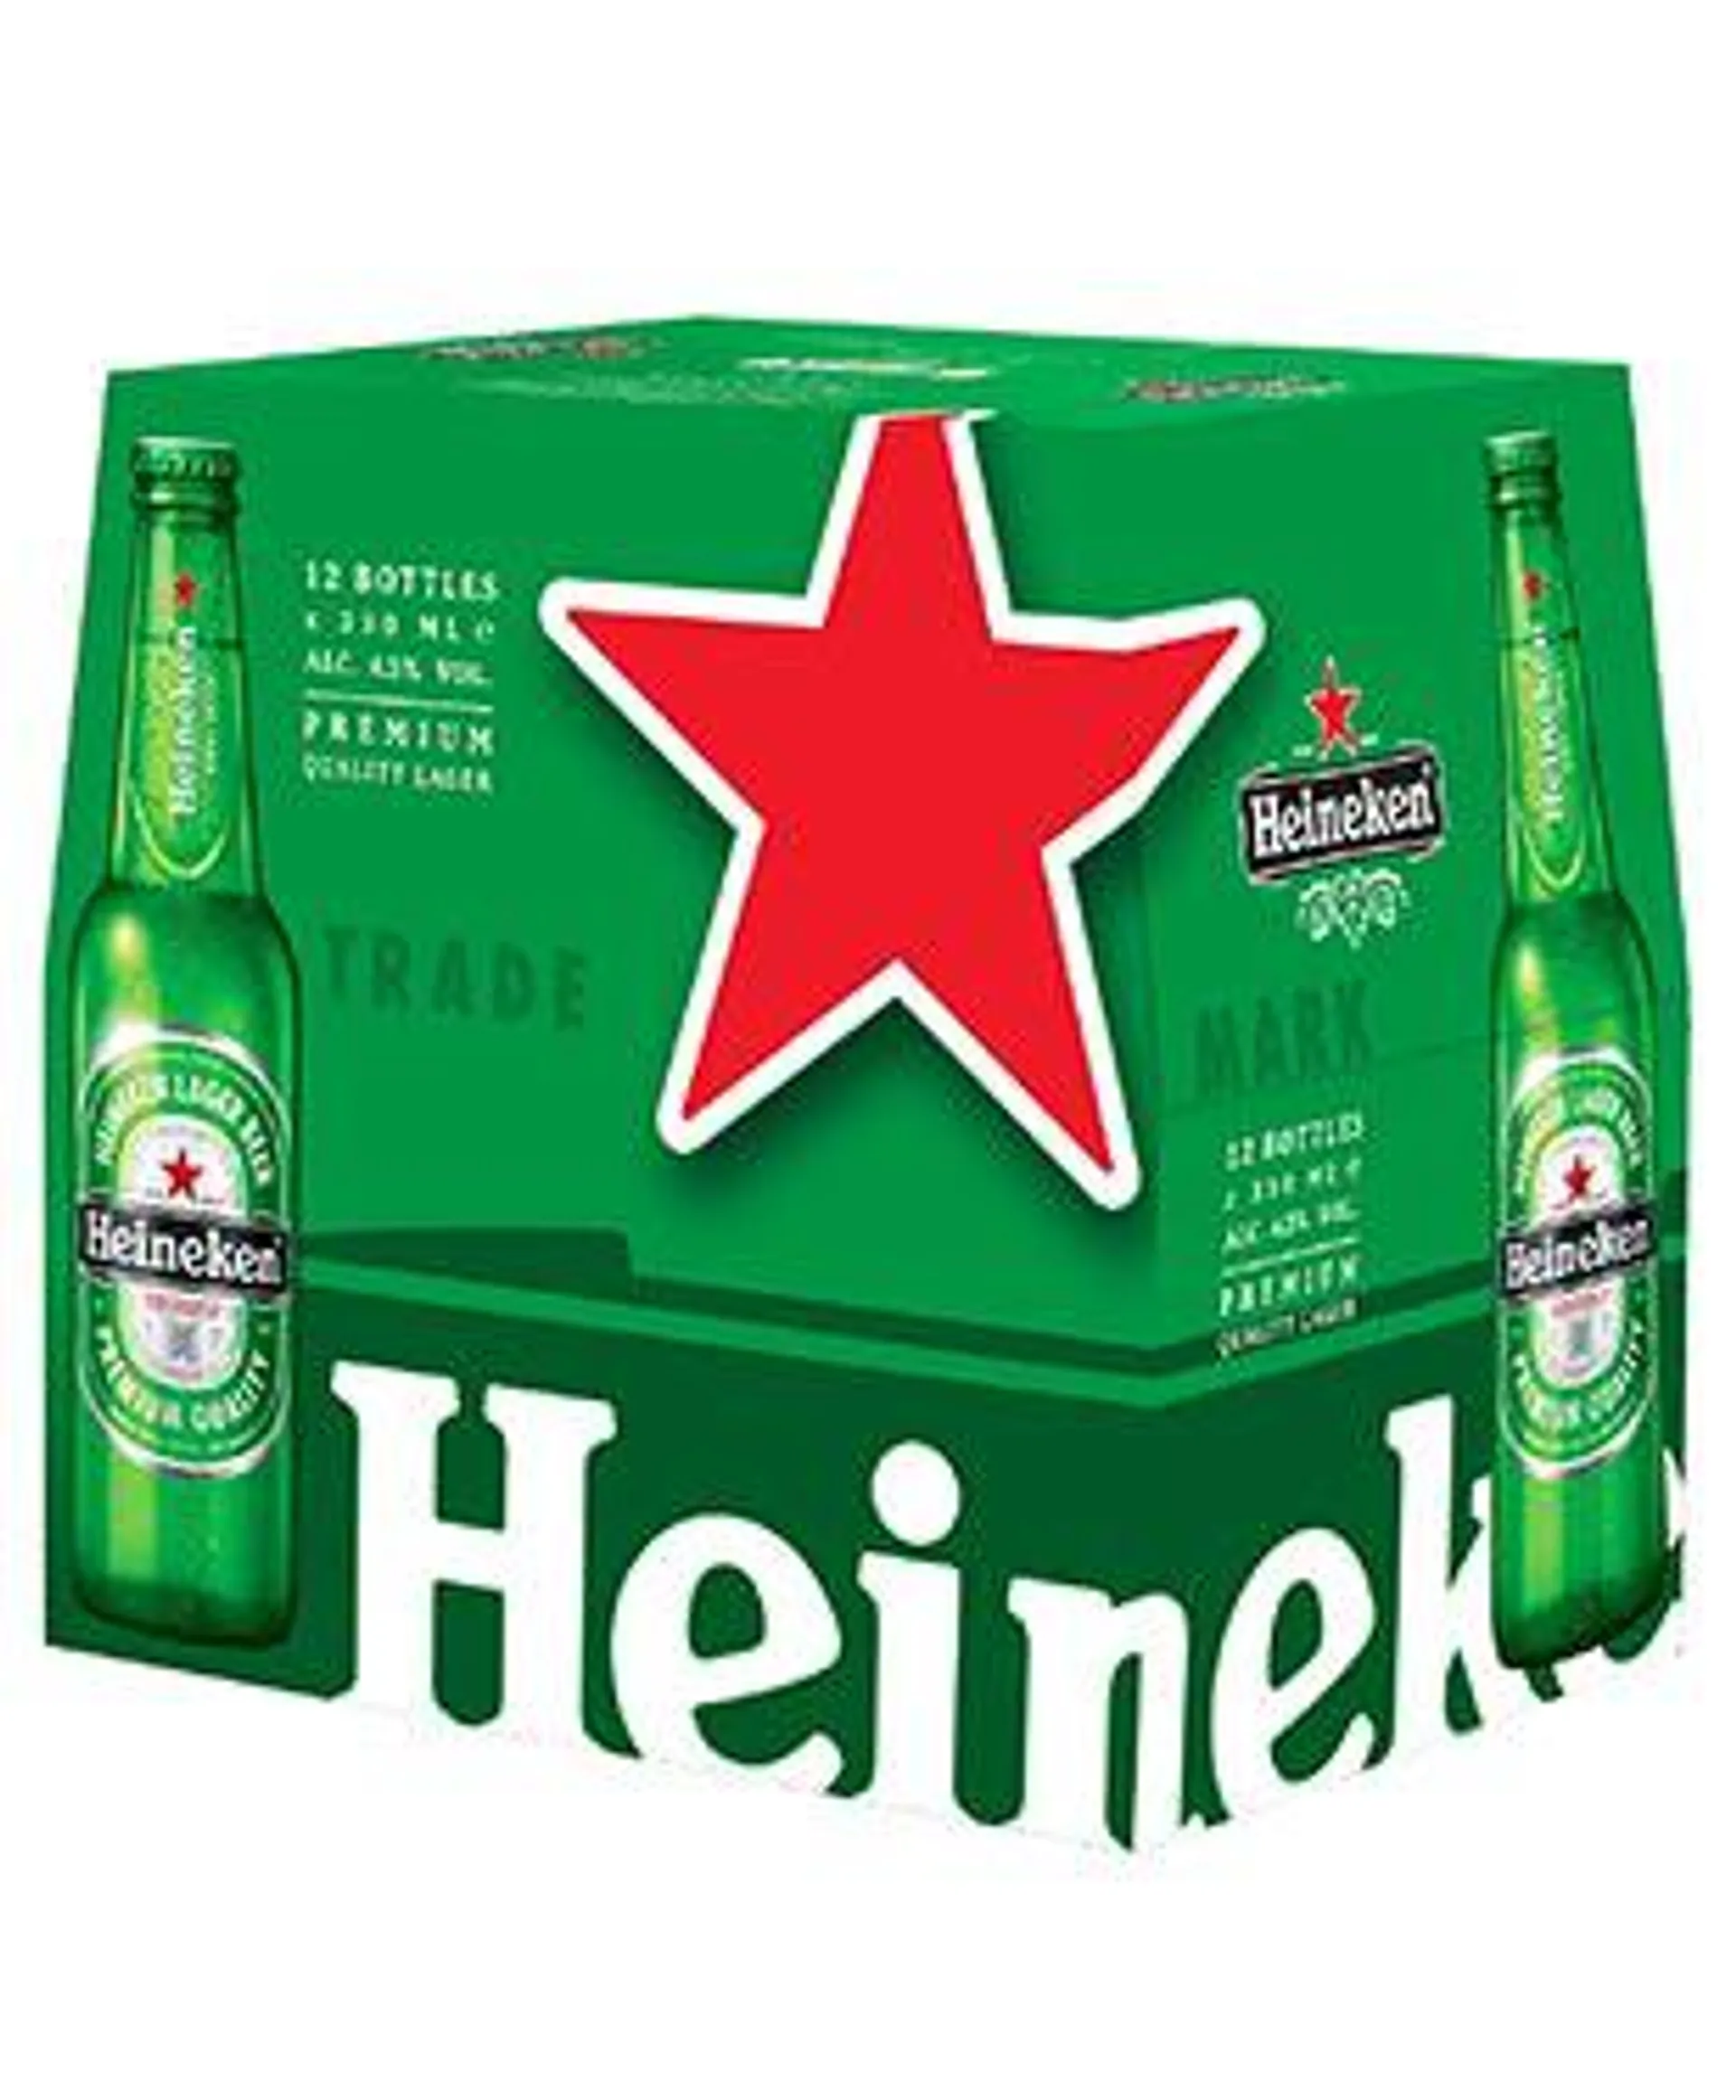 Heineken Bottle 330ml 12 Pack 4.3%